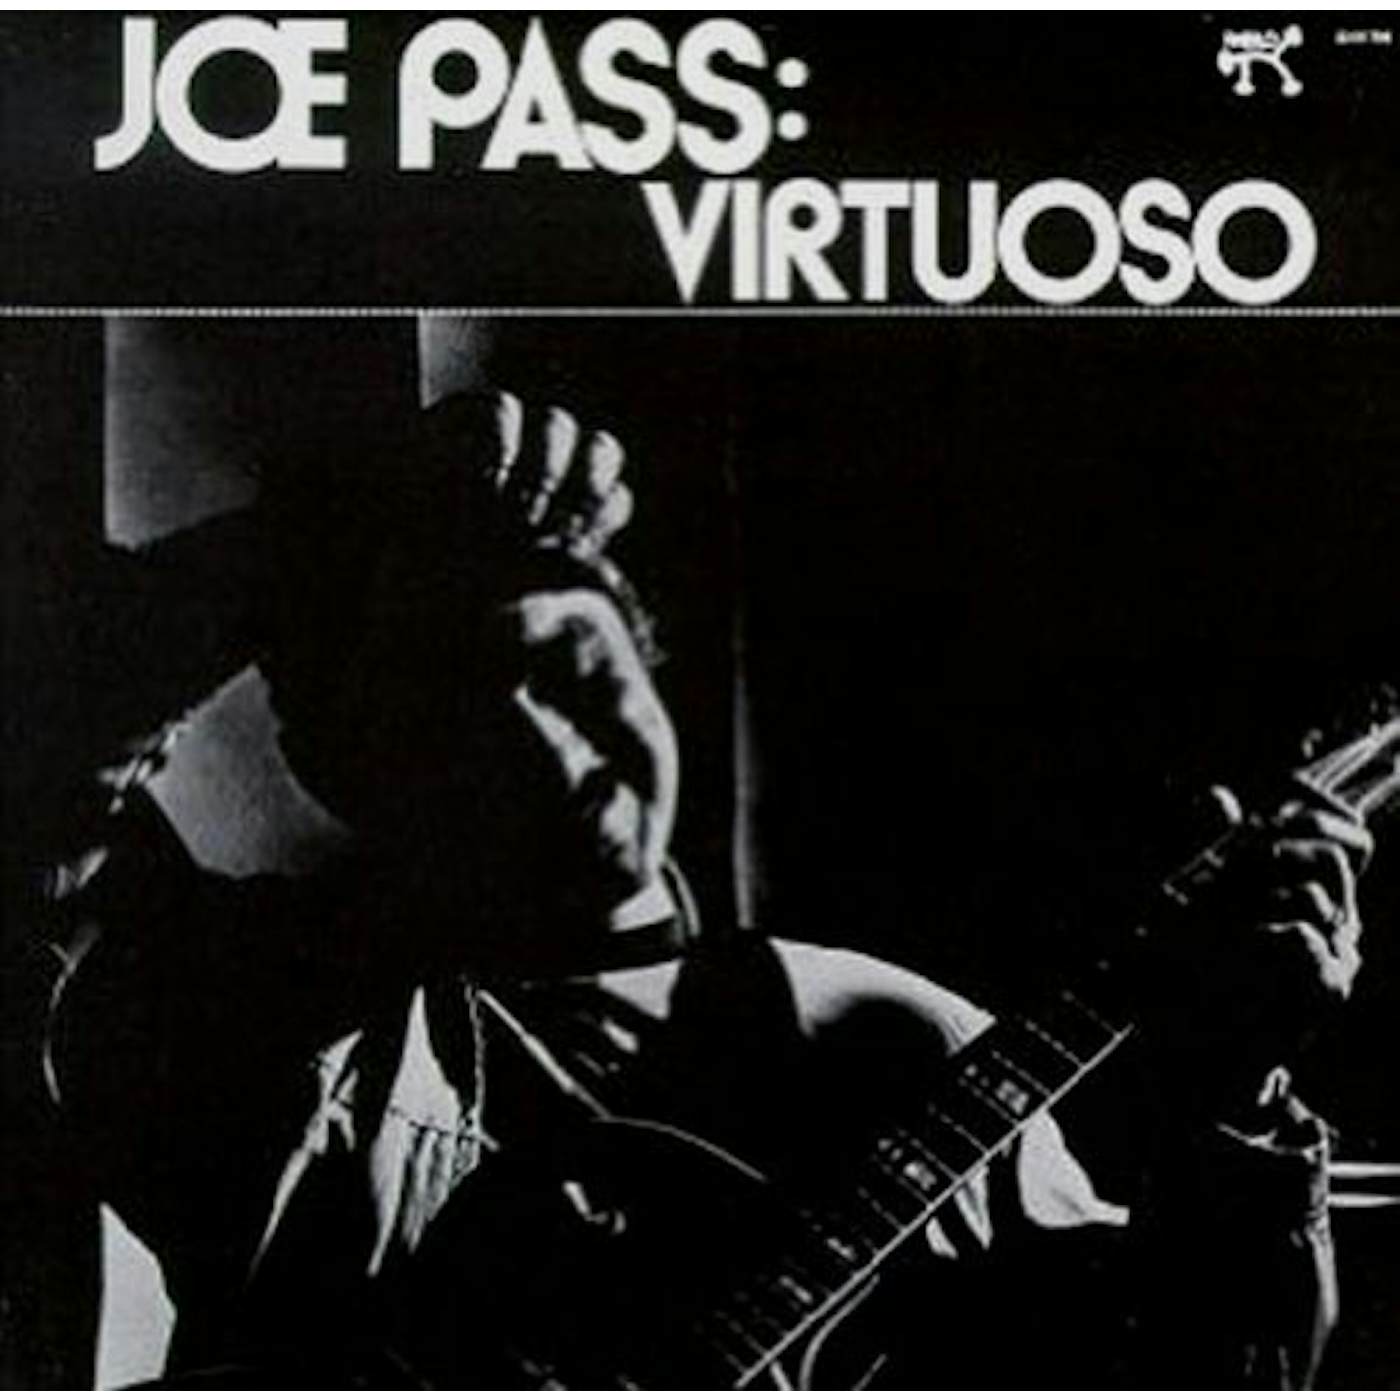 Joe Pass Virtuoso Vinyl Record